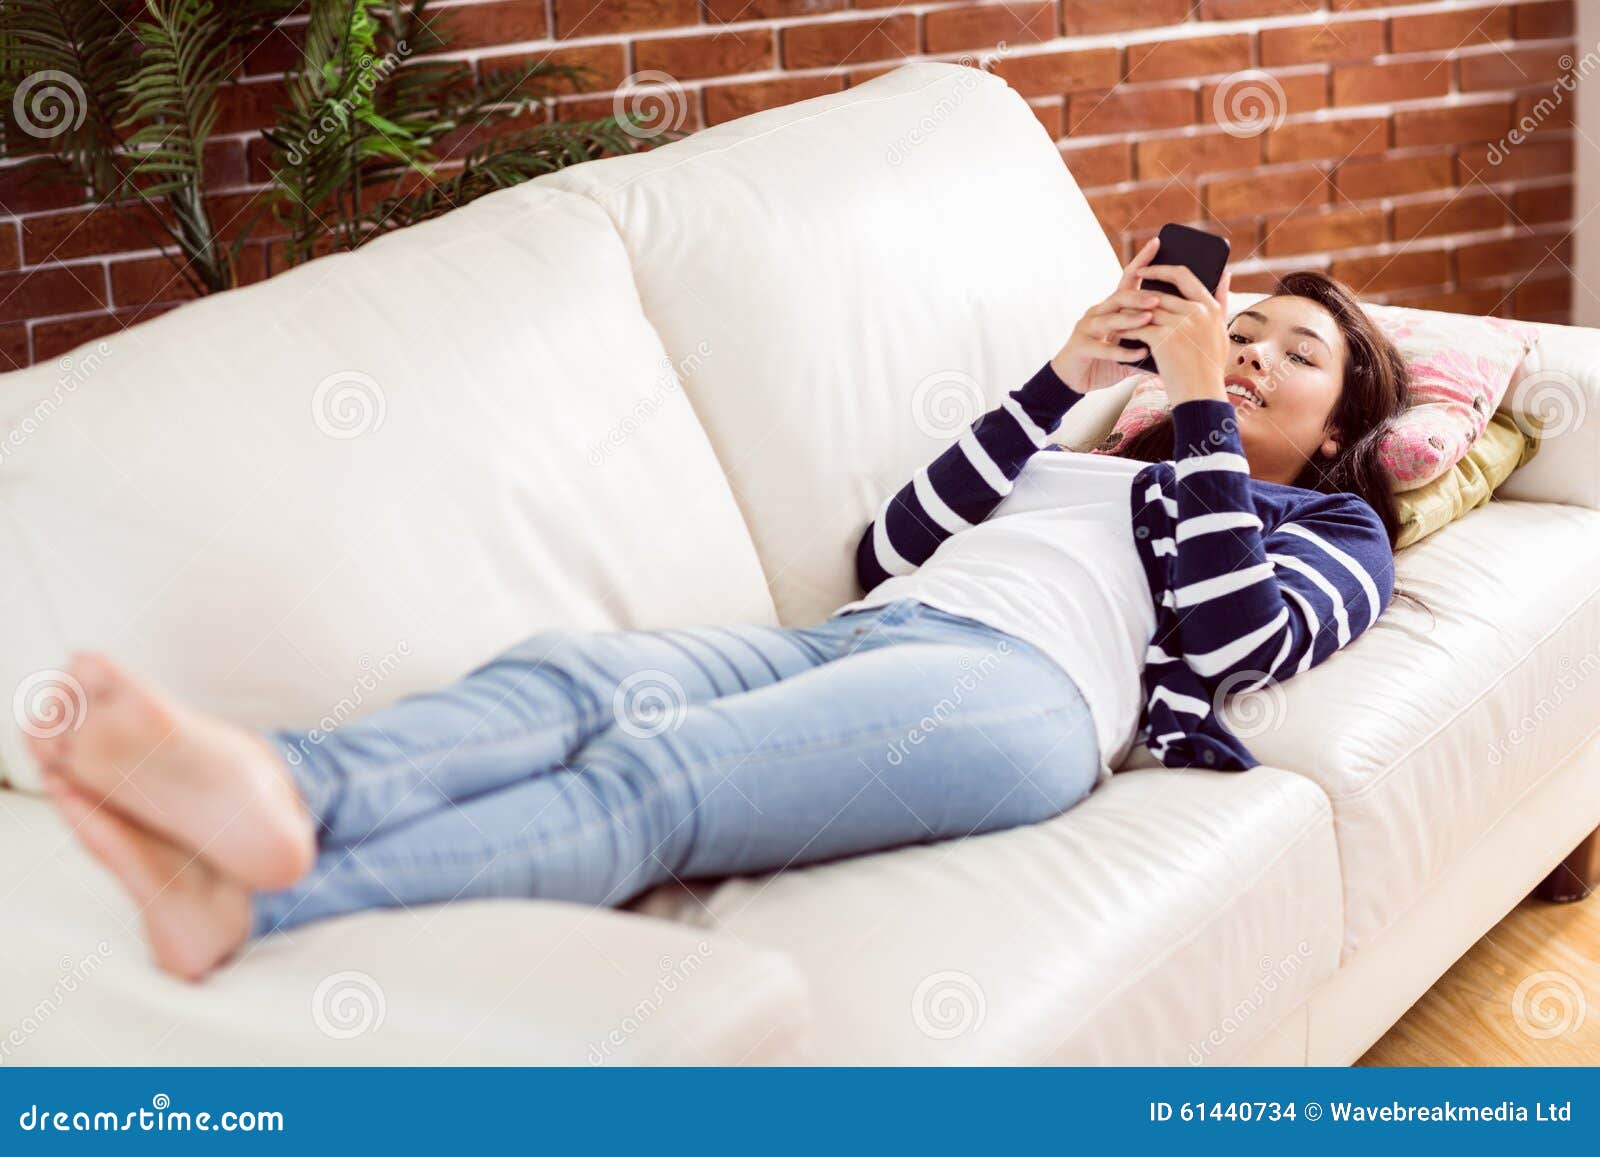 Лежат или лижат. Телефон лежит на диване. Девушка лежит на диване. Женская фотосессия на диване с телефоном. Человек лежит на диване.